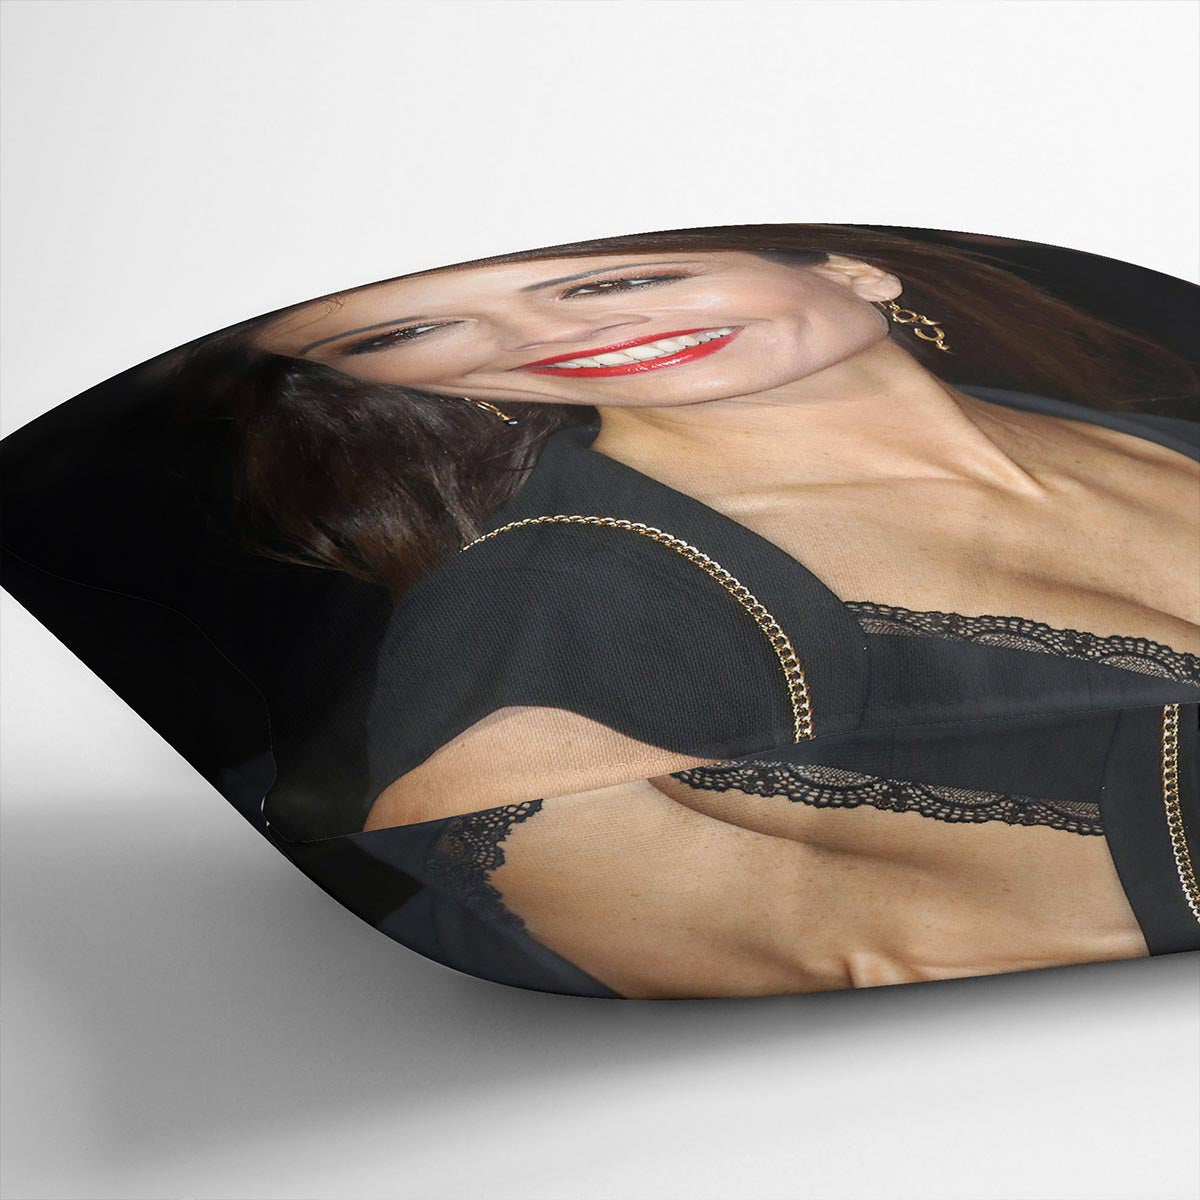 Melanie Sykes in a black dress Cushion